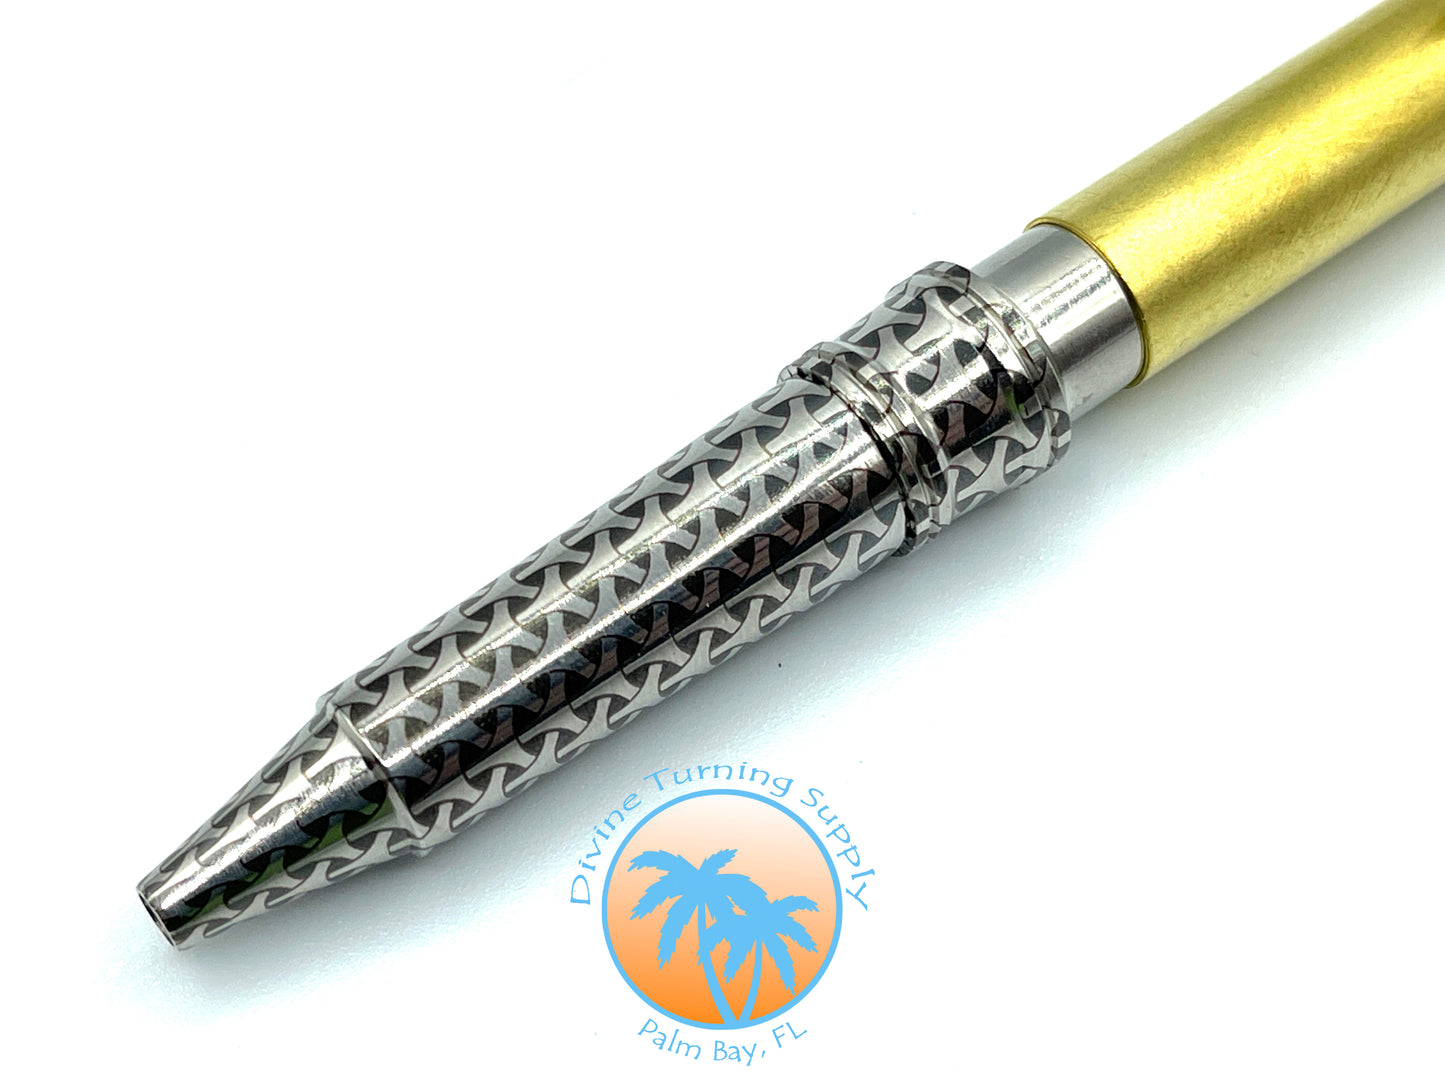 Coyote Twist Pen Kit - Engraved